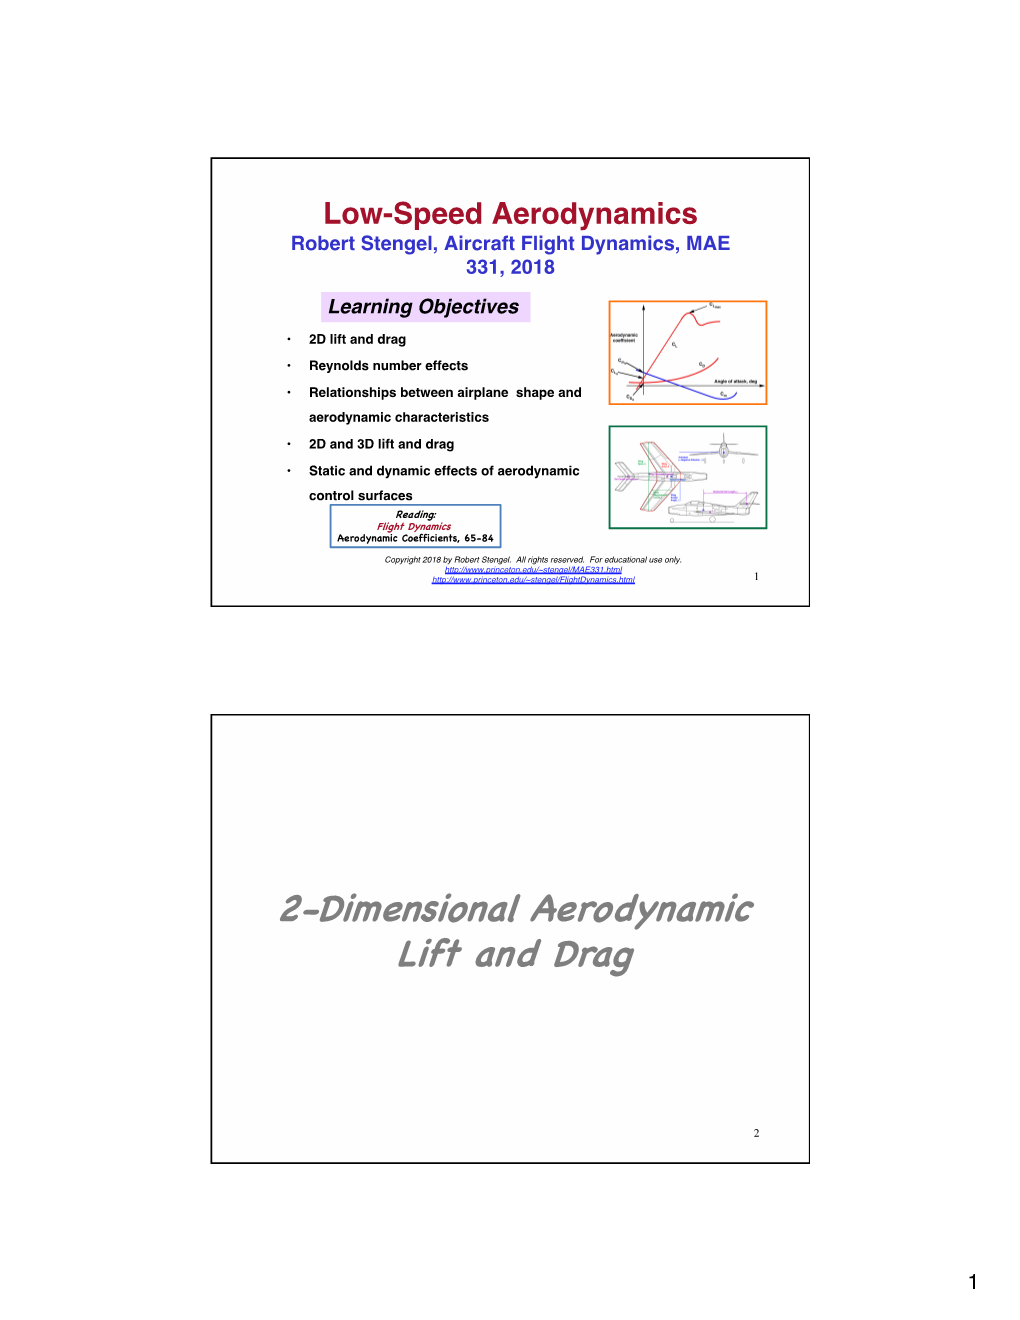 Low-Speed Aerodynamics Robert Stengel, Aircraft Flight Dynamics, MAE 331, 2018 Learning Objectives